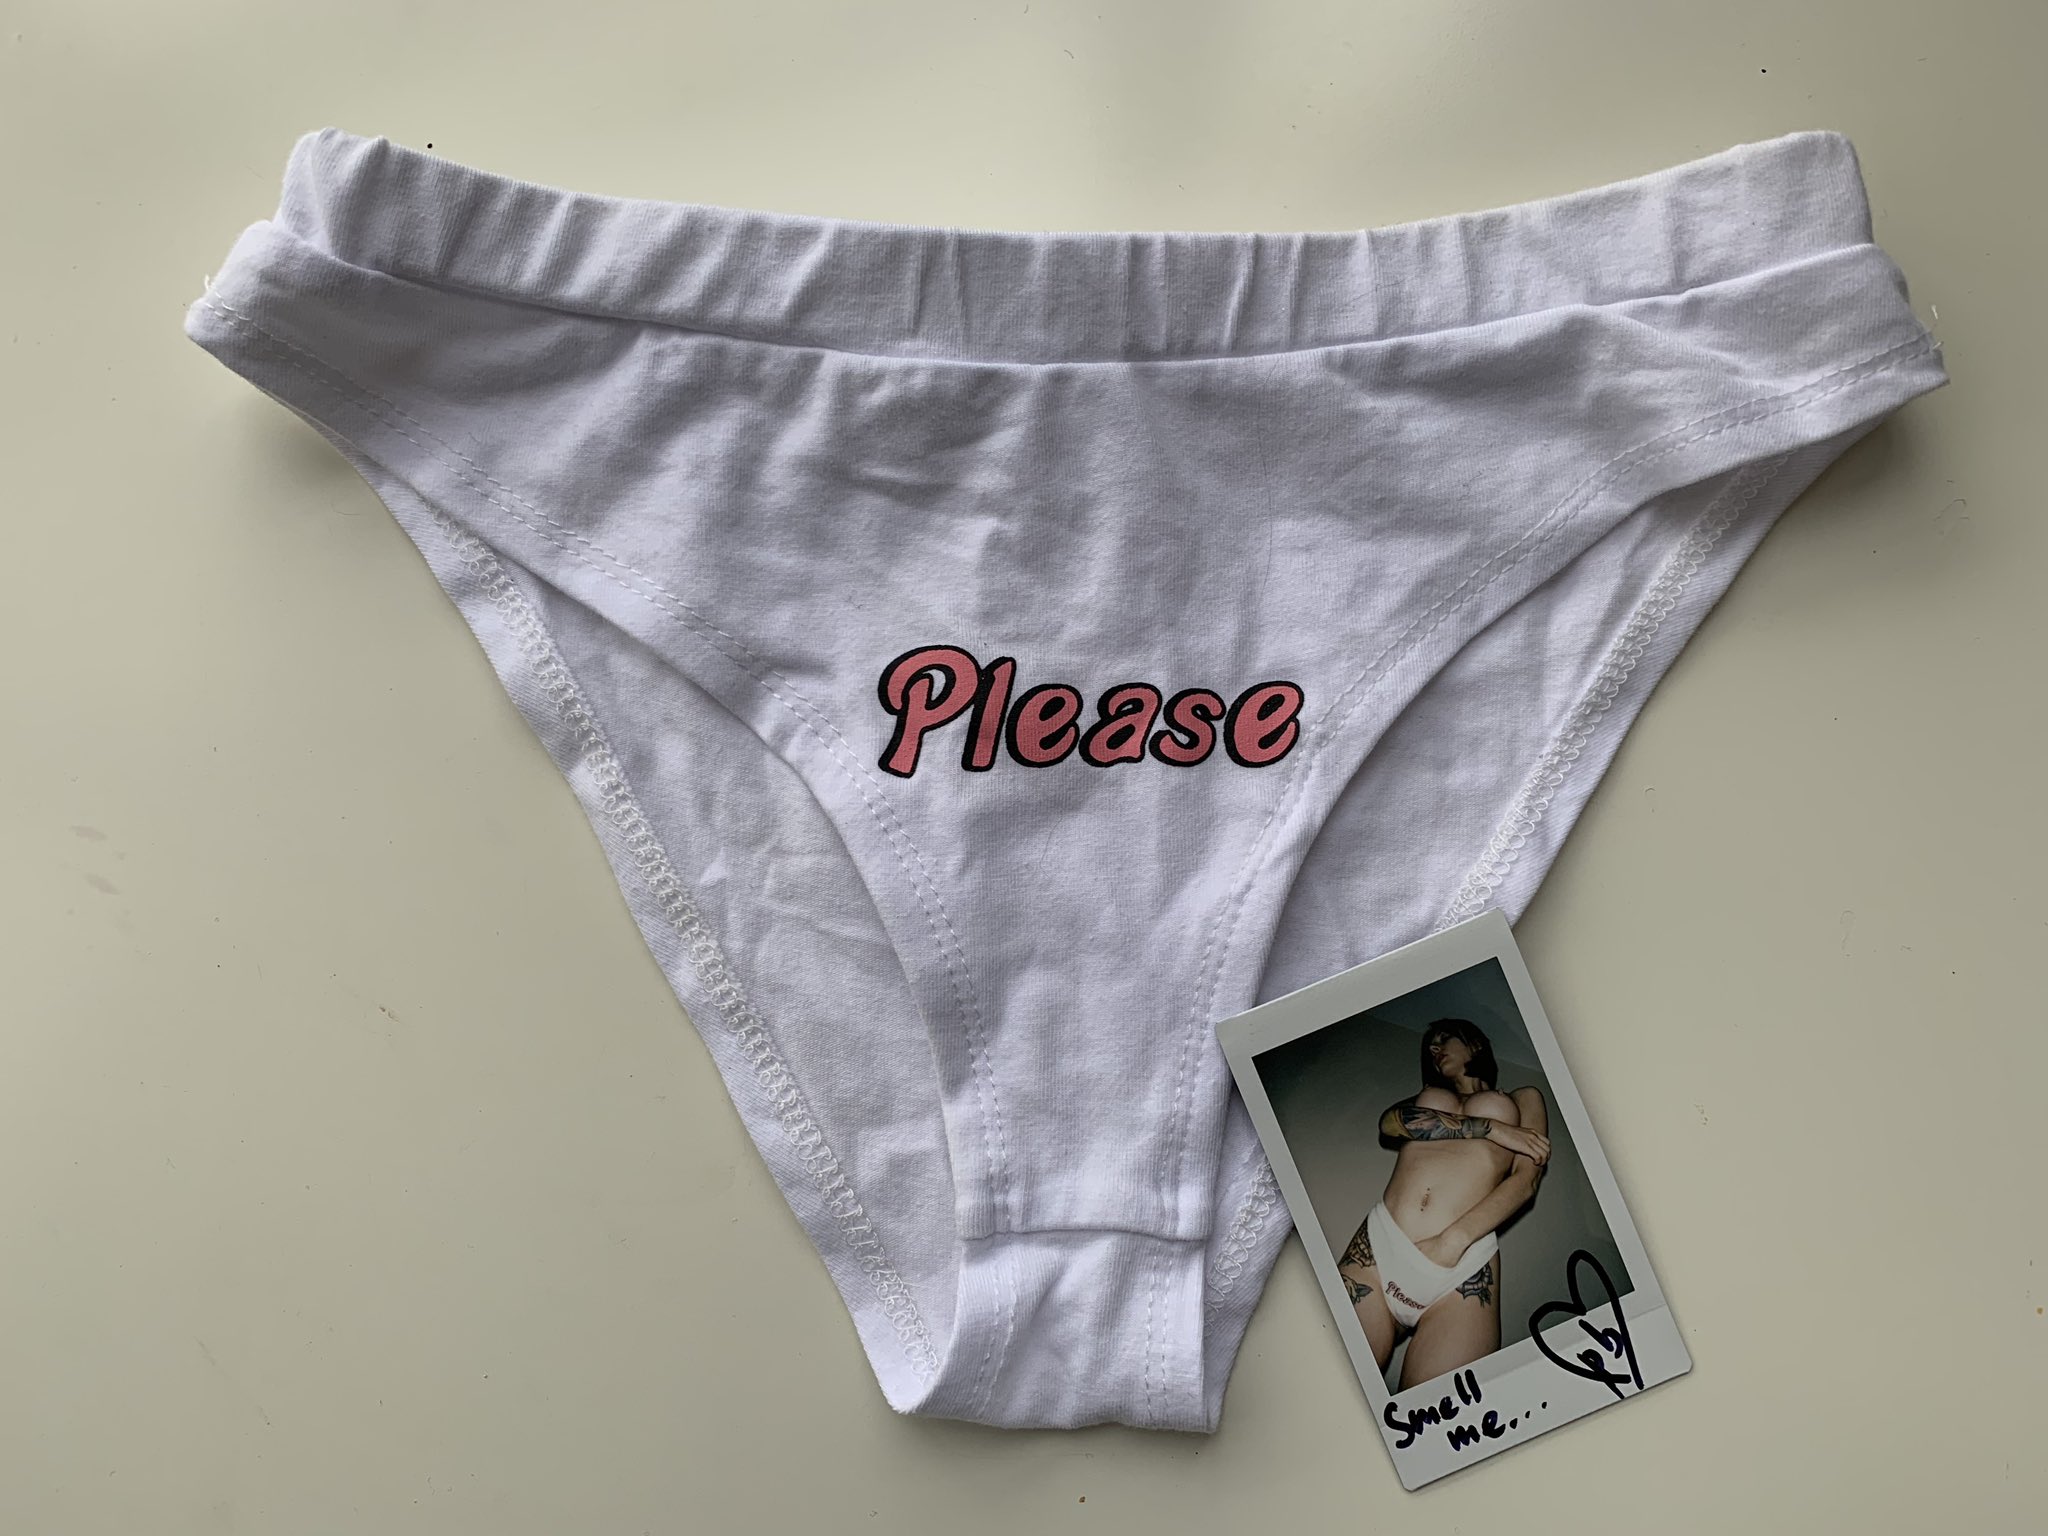 Selling panties on onlyfans - 🧡 Panty selling! 